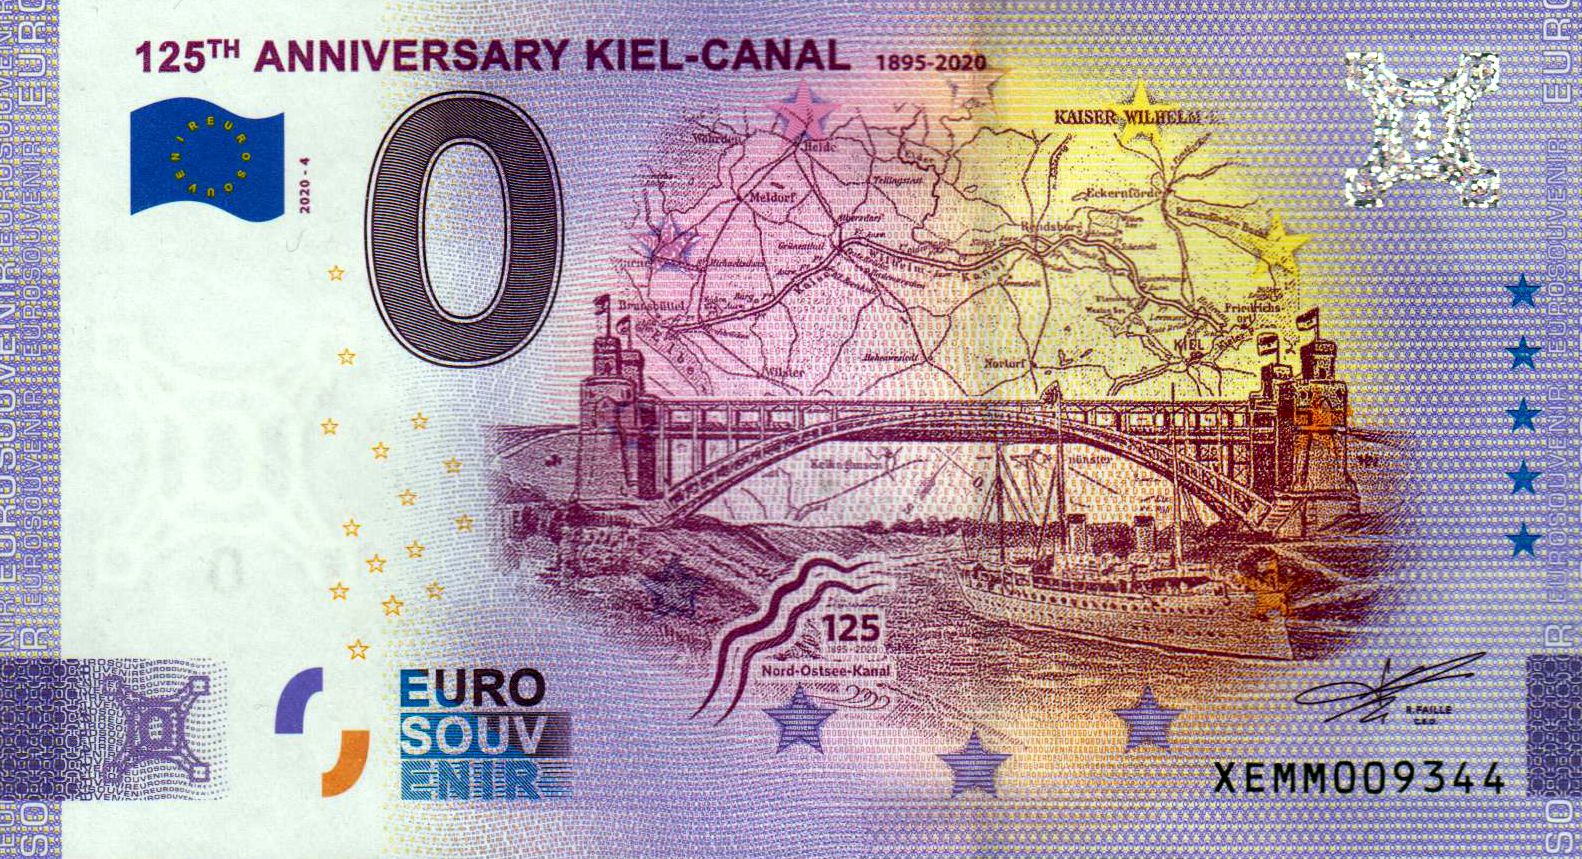 125th Anniversary Kiel-Canal 2020-4 Anniversary